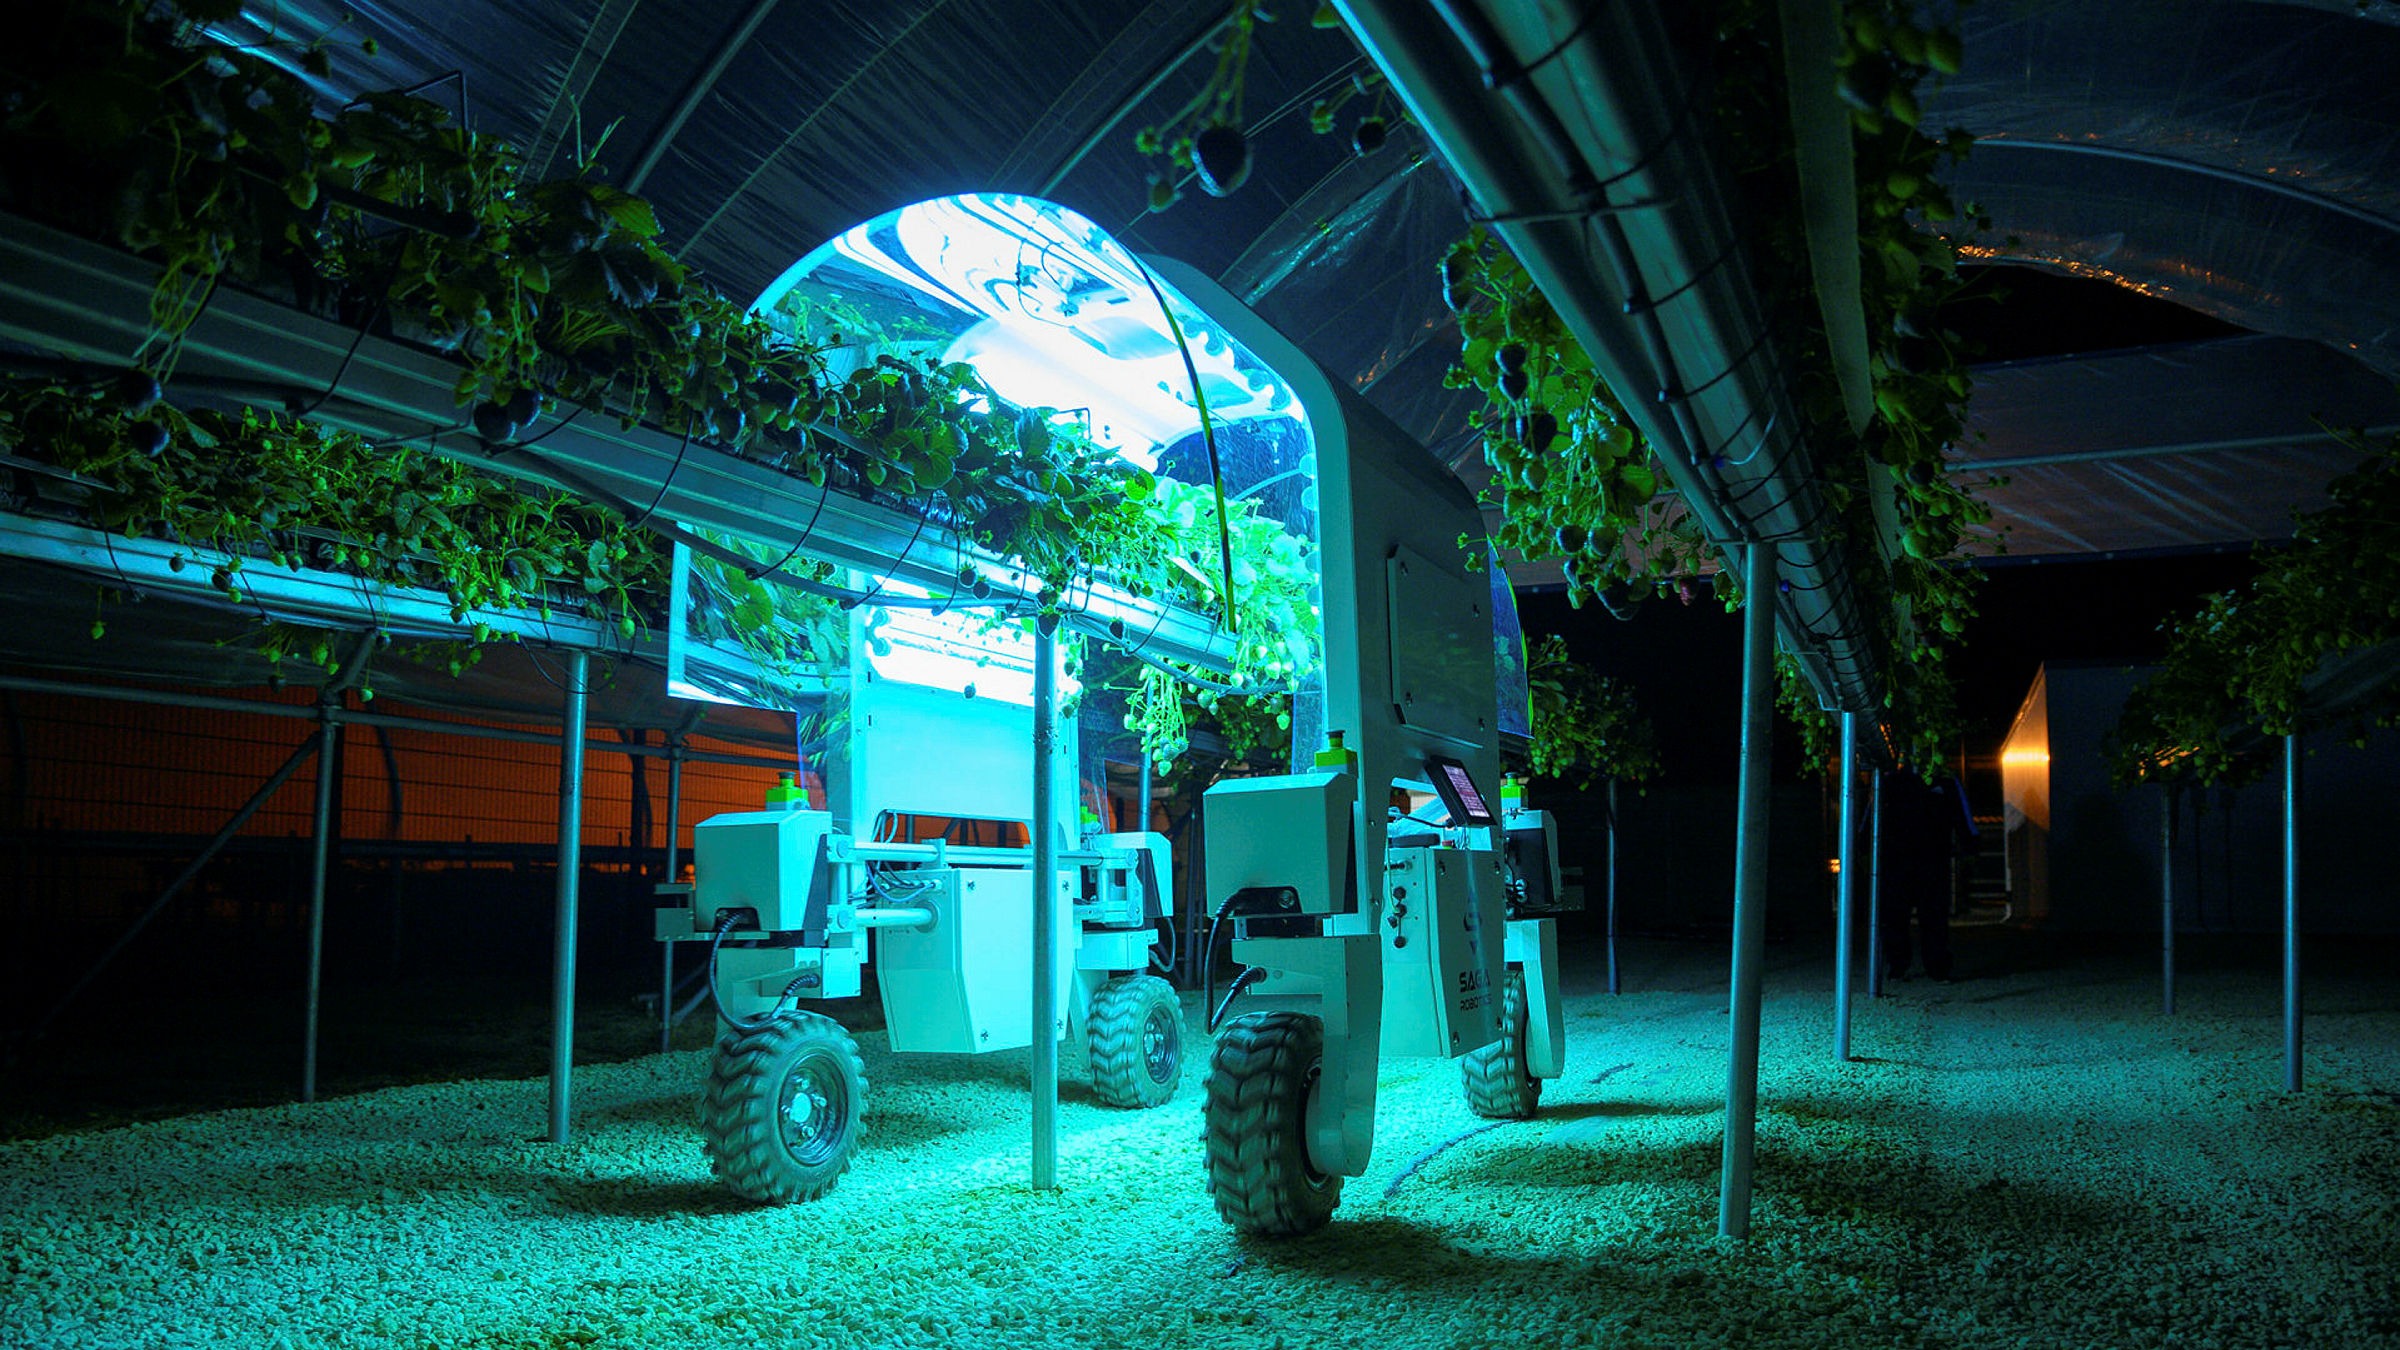 pause skarp Det Farm robots given Covid-19 boost | Financial Times